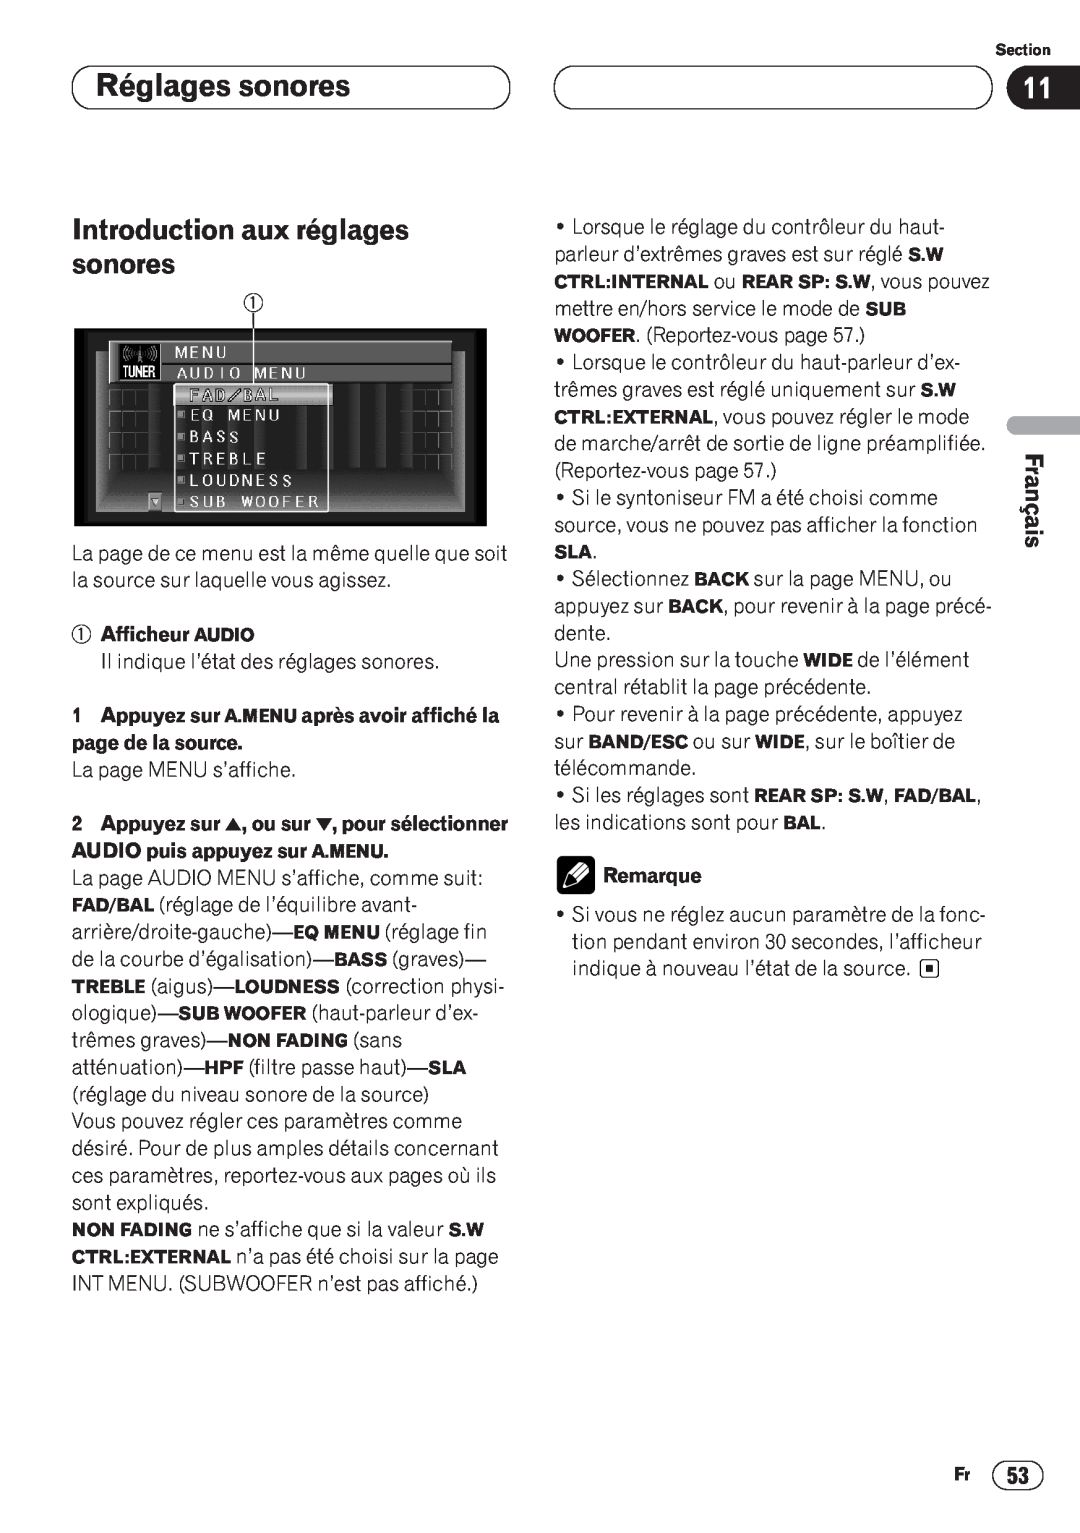 Pioneer AVH-P6400CD Réglages sonores, Introduction aux réglages sonores, Italiano, Nederlands, Afficheur AUDIO, Remarque 